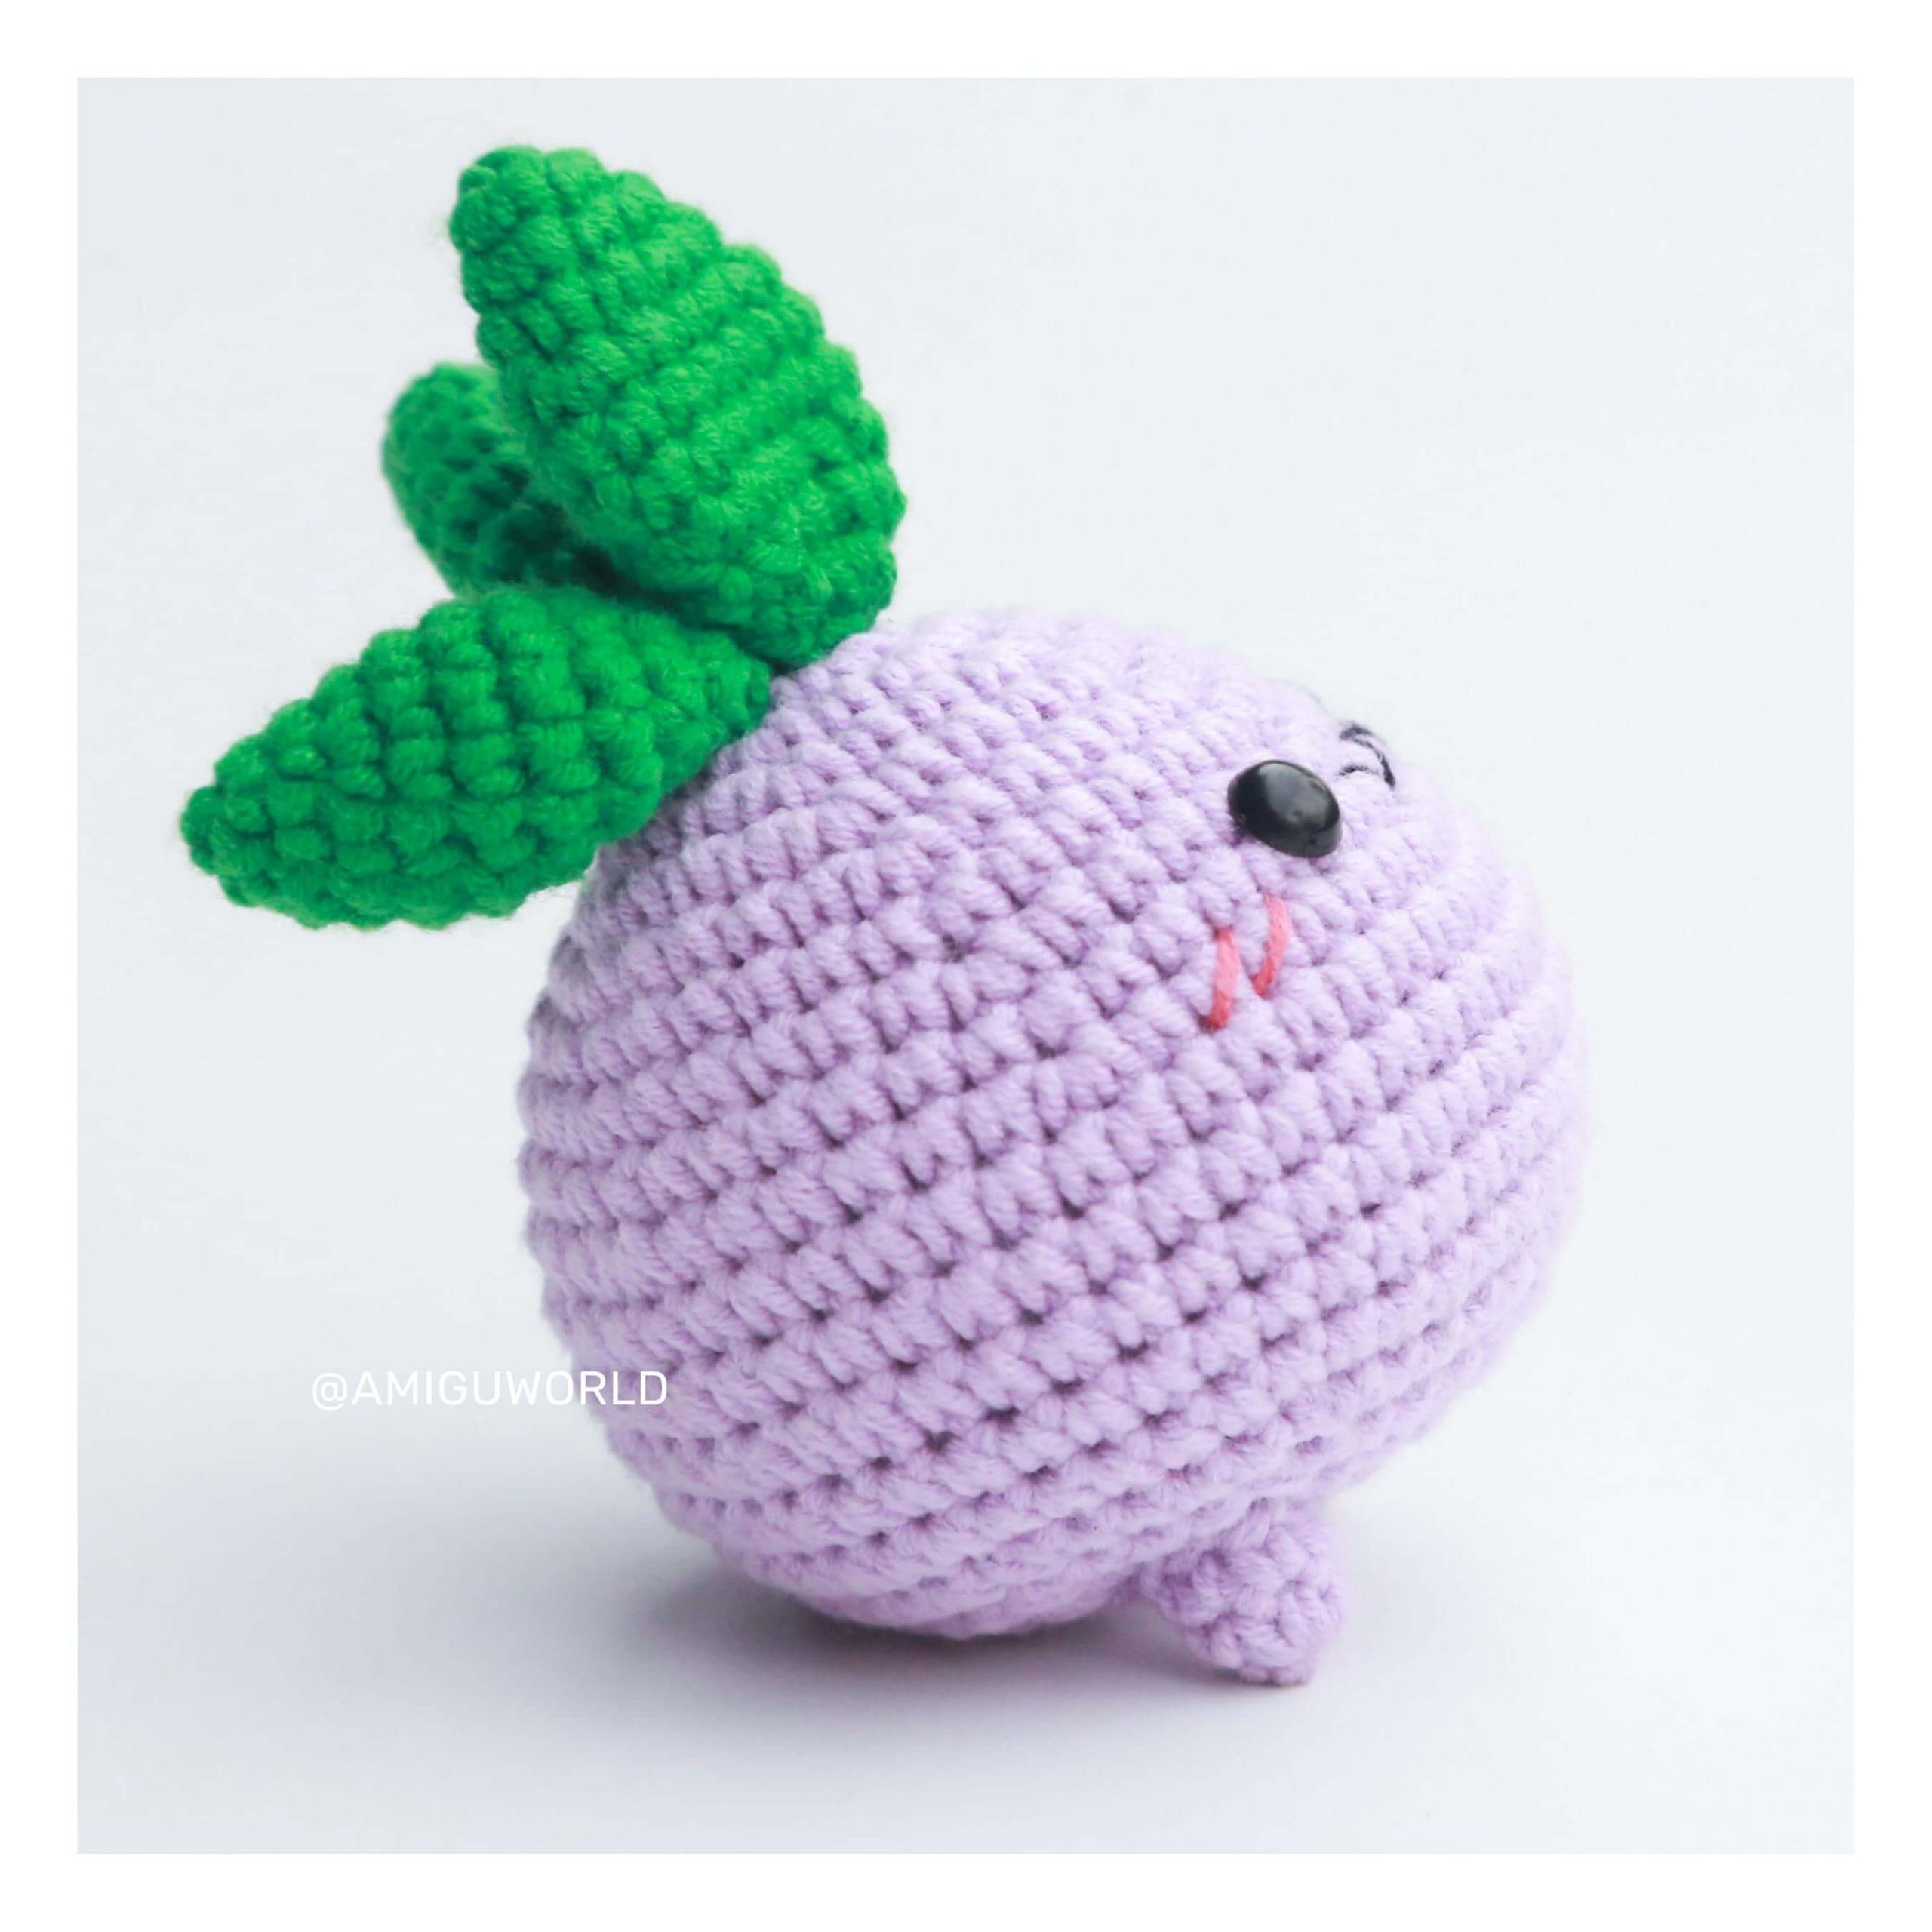 oddish-amigurumi-crochet-pattern (5)